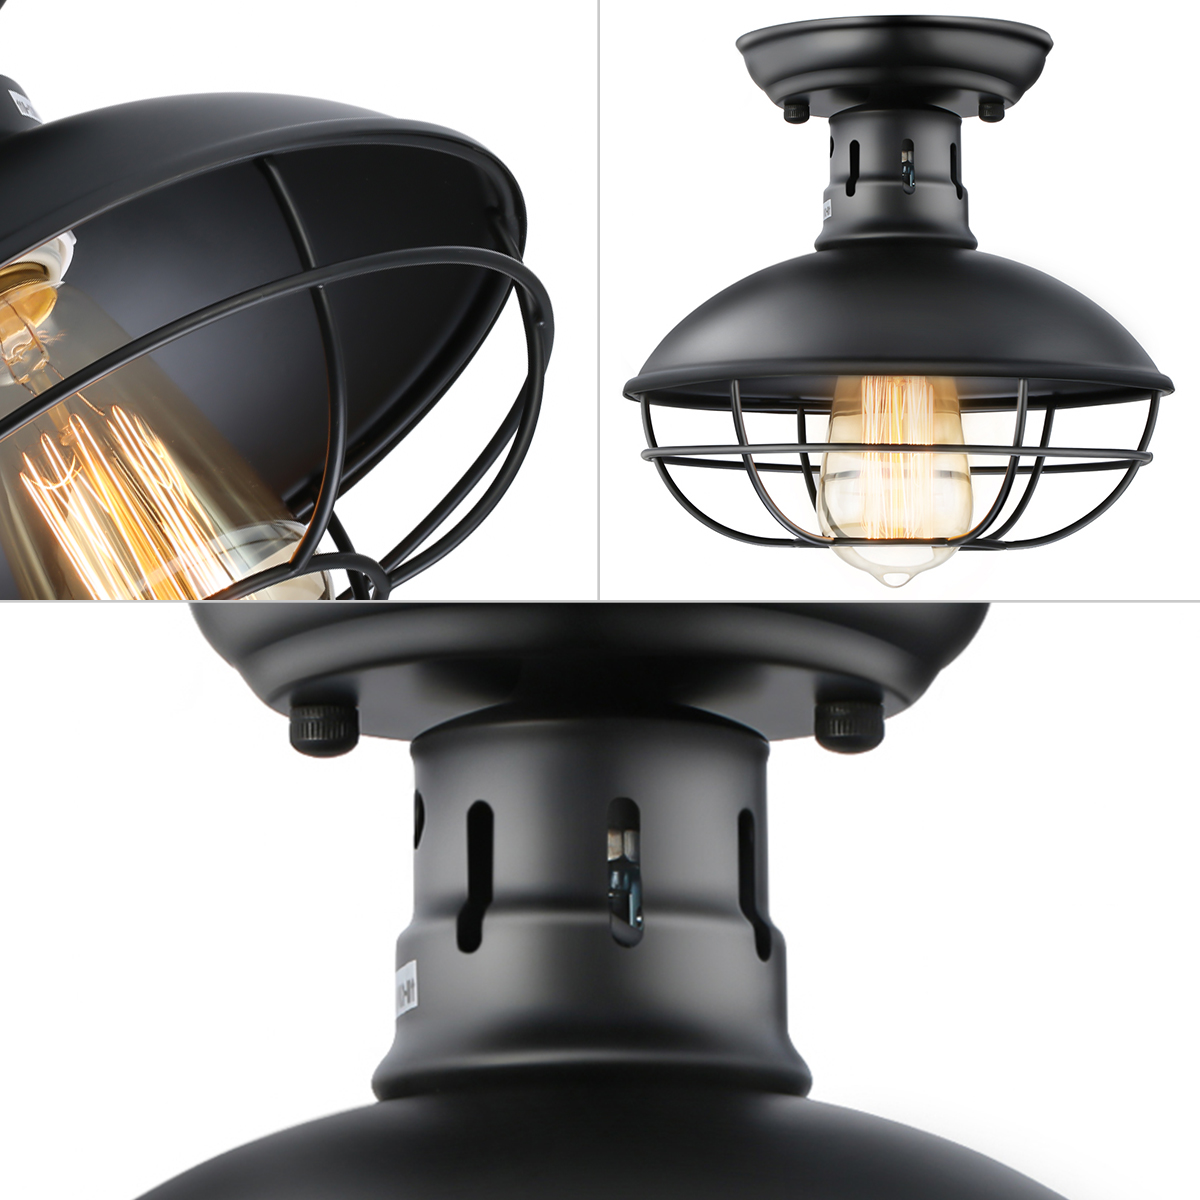 110v-Modern-Nordic-Retro-Iron-lamp-Lights-Cage-Fixture-Decor-For-Living-Room-Bar-Loft-Home-Decor-1789807-2